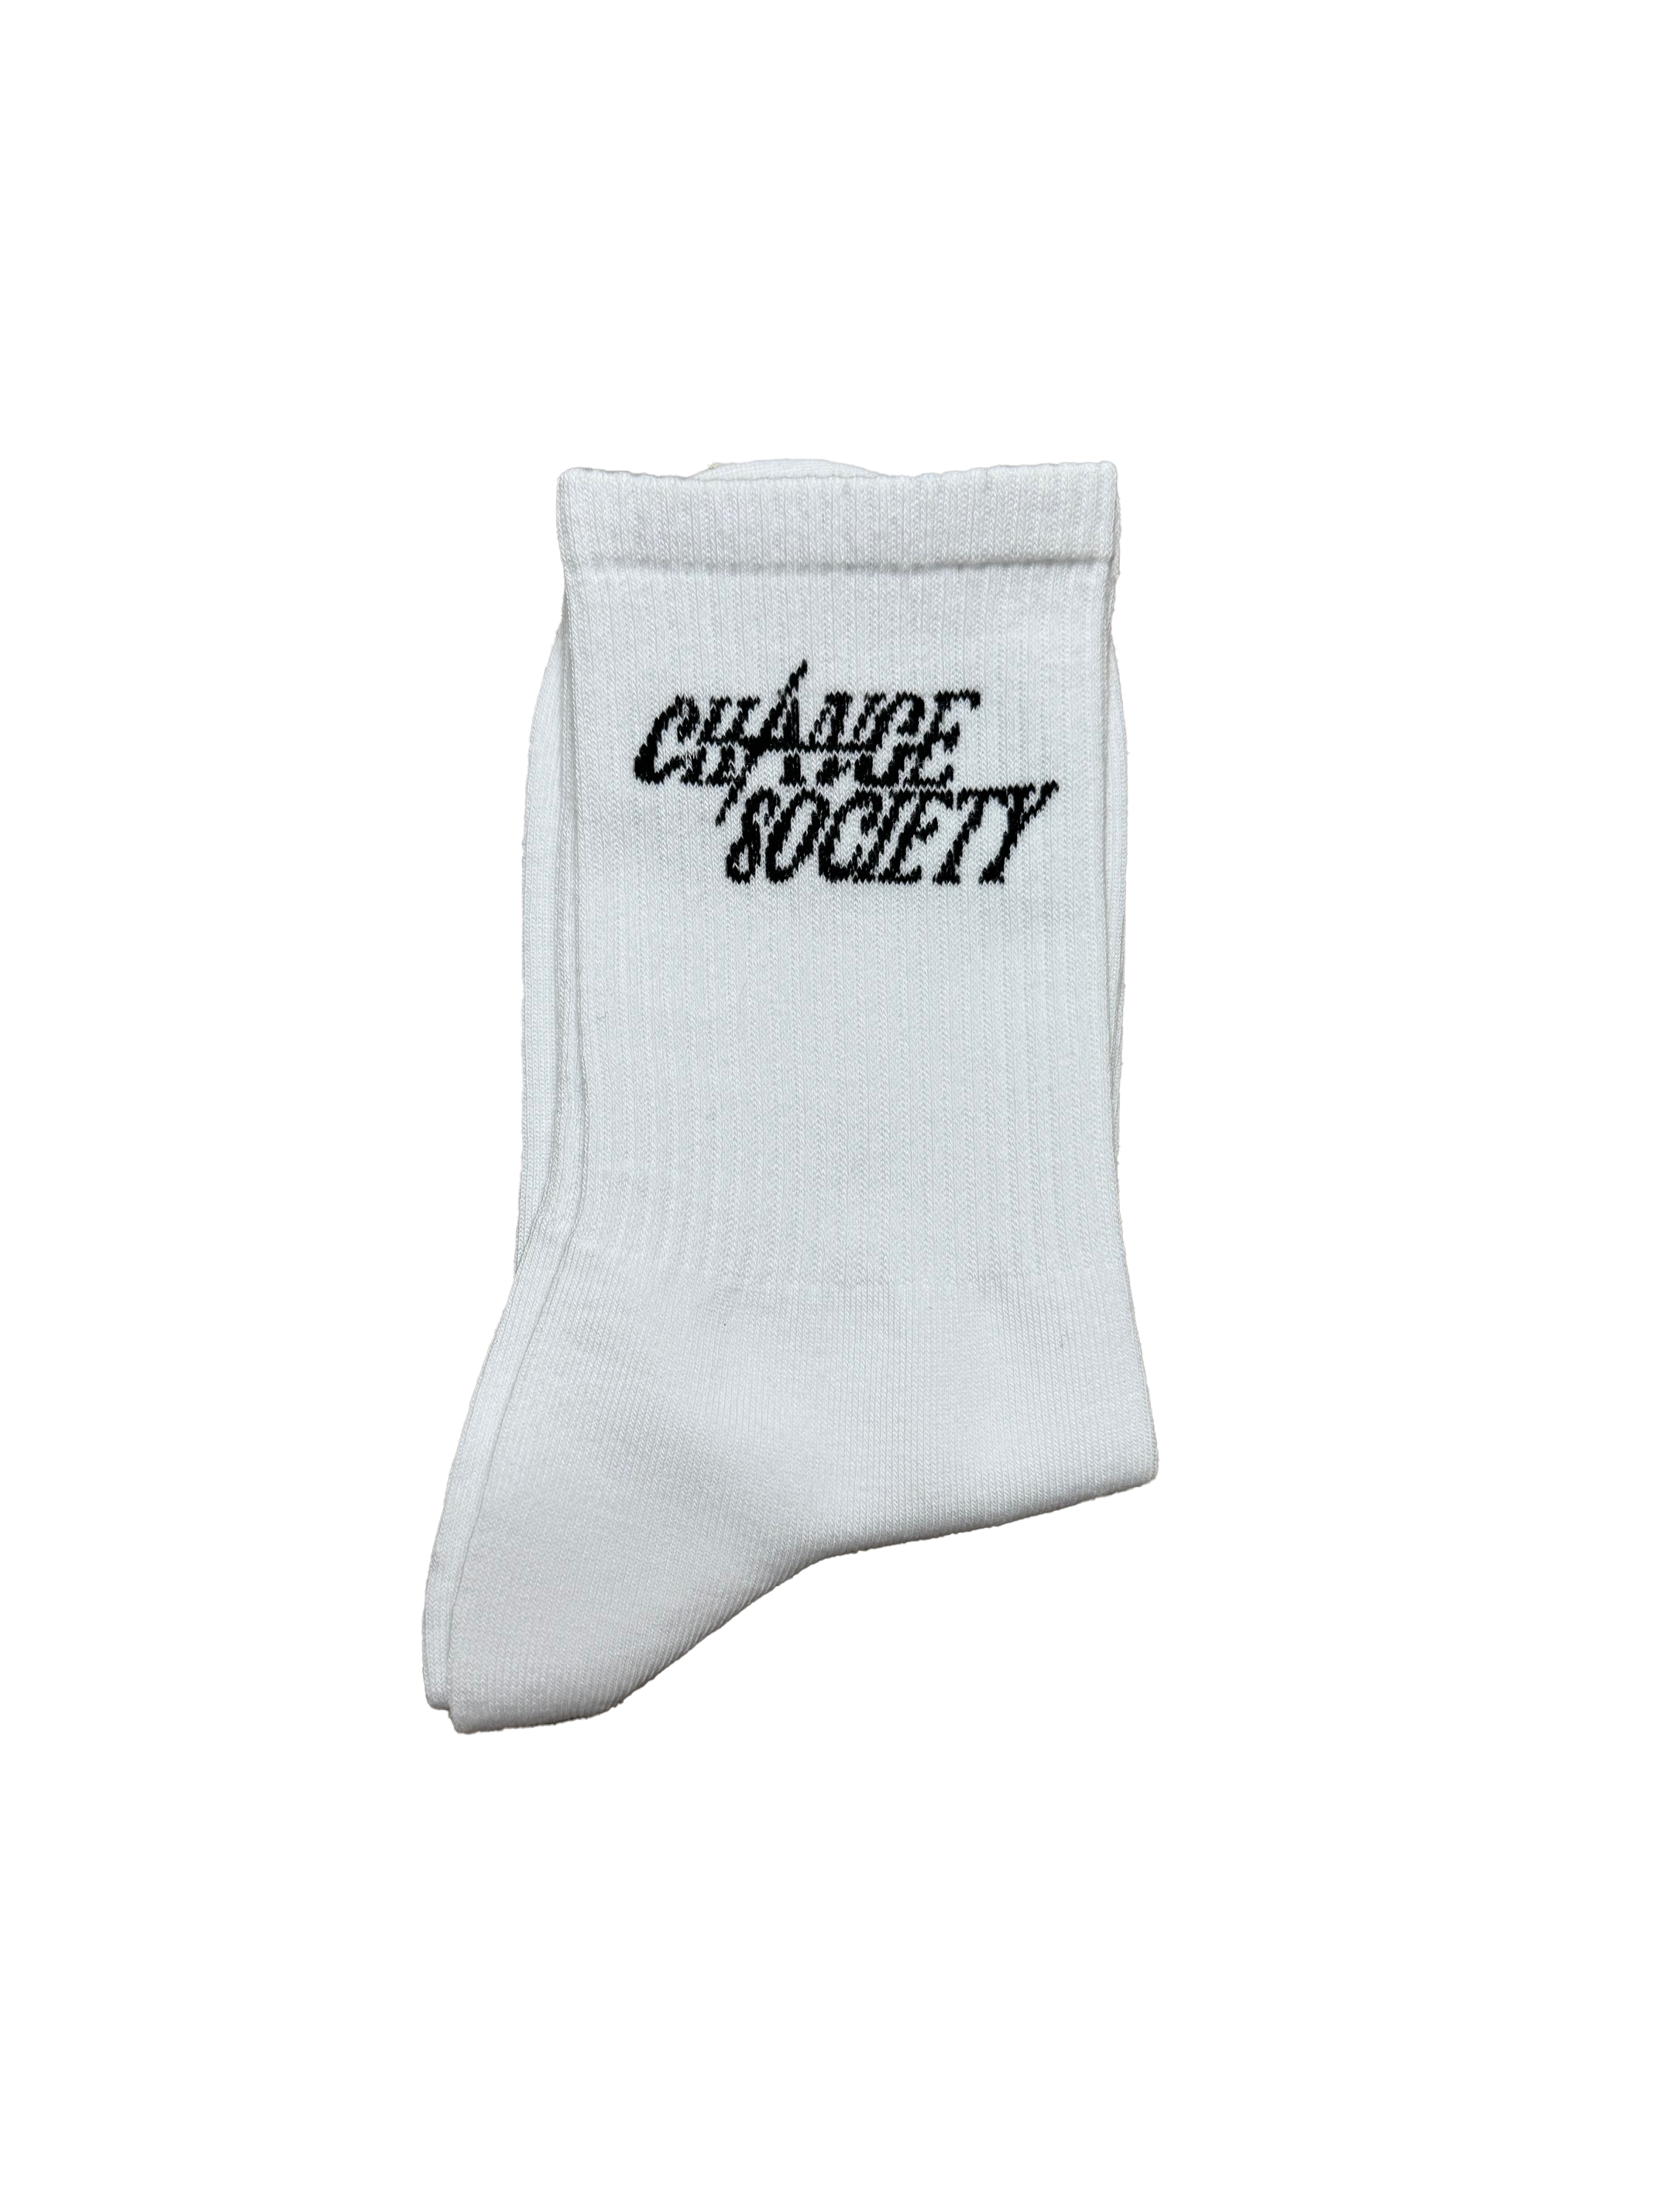 Change Society "Dri-Fit" Socks